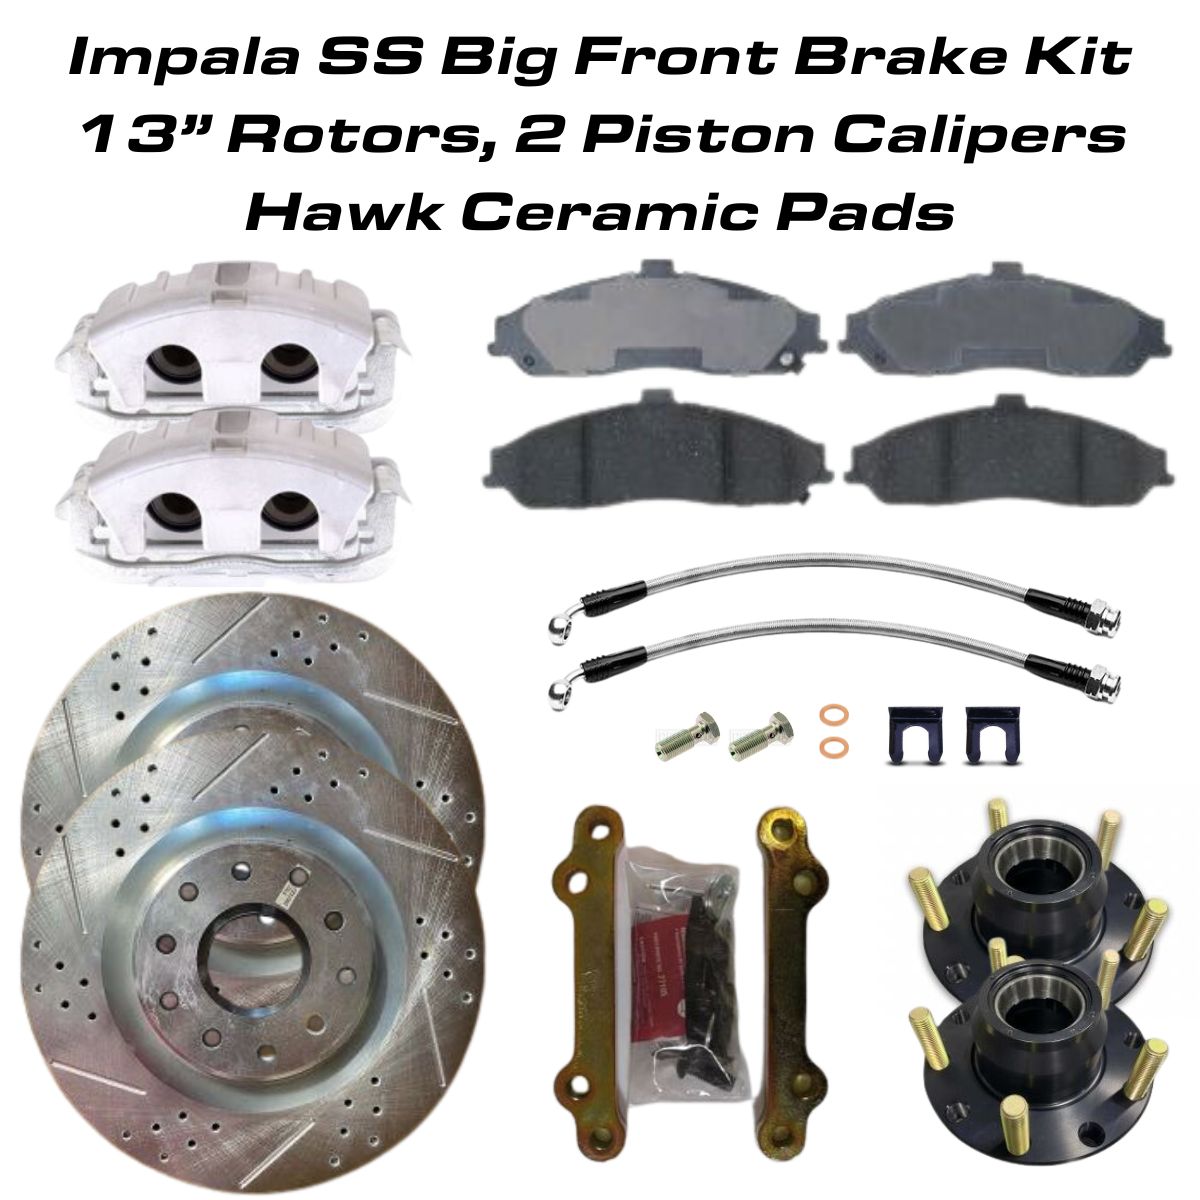 Impala SS Big Front Brake Kit with 2 Piston Calipers, 13 Inch Rotors, Hawk Ceramic Pads